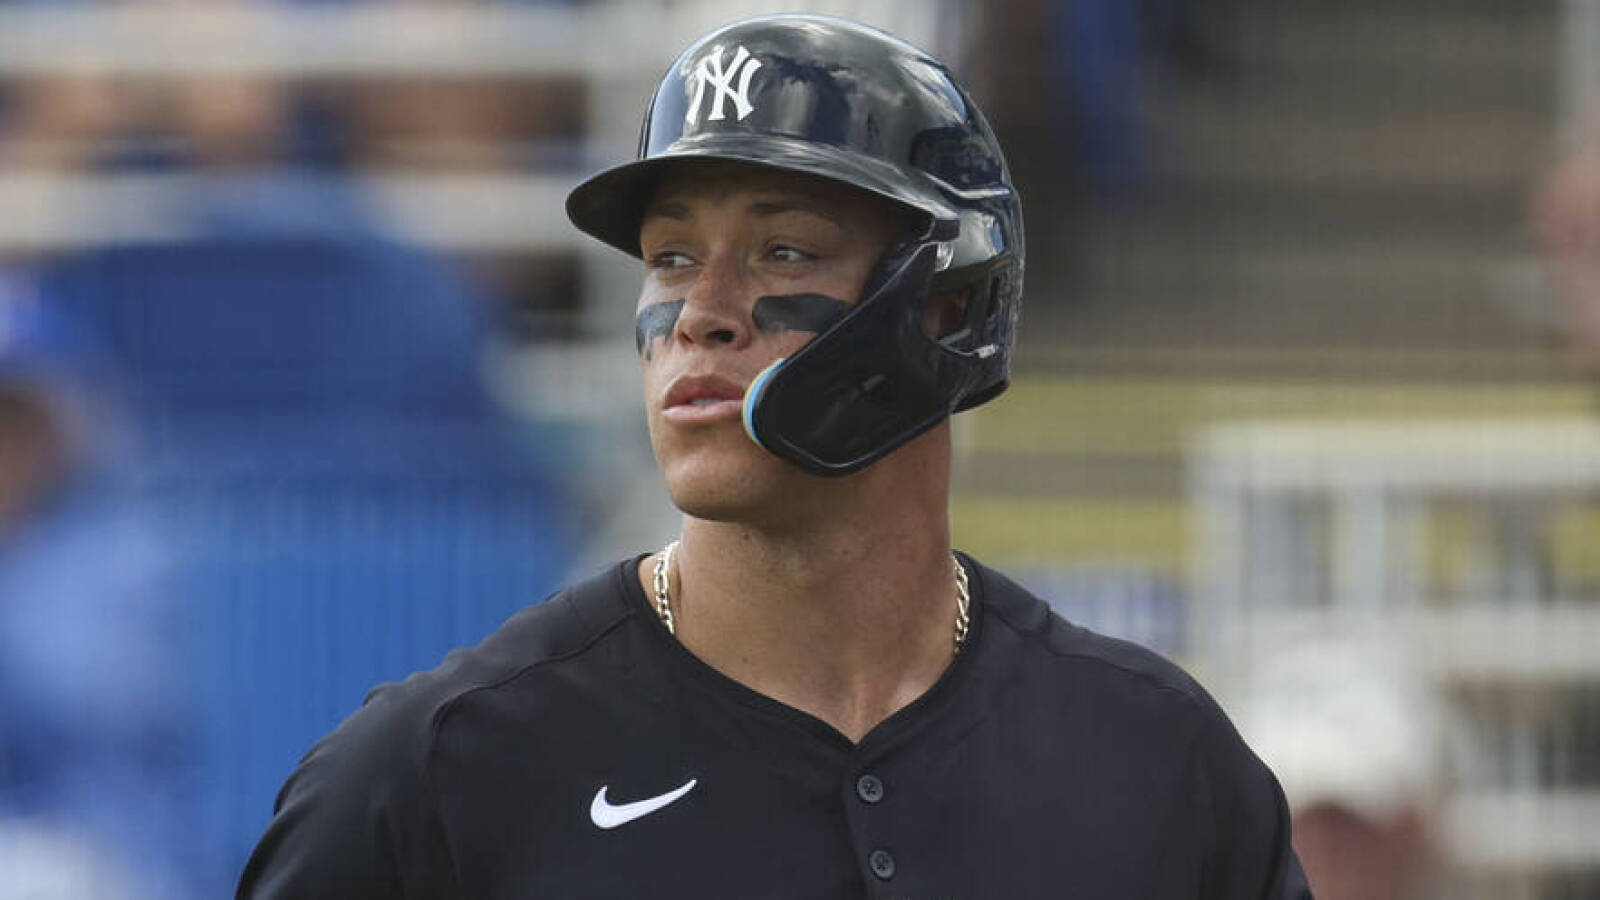 Yankees slugger Aaron Judge shares update on core injury